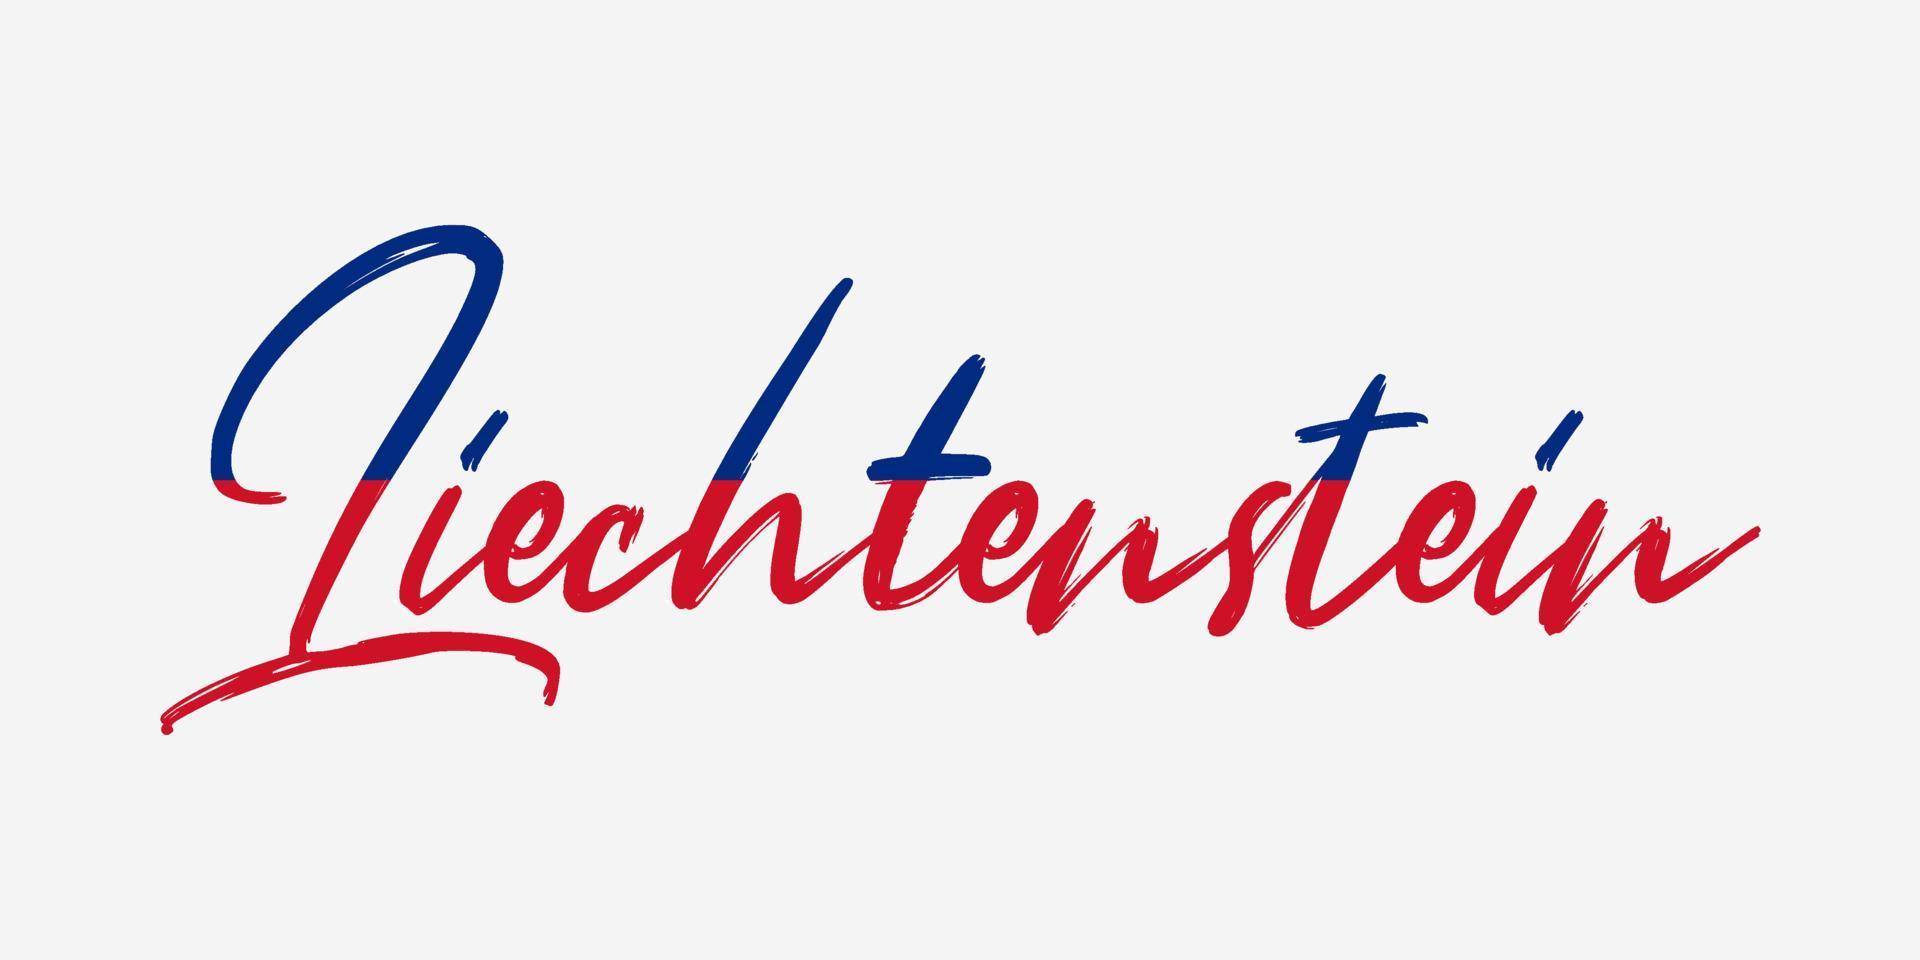 Liechtenstein tekst kleur schetsen vector